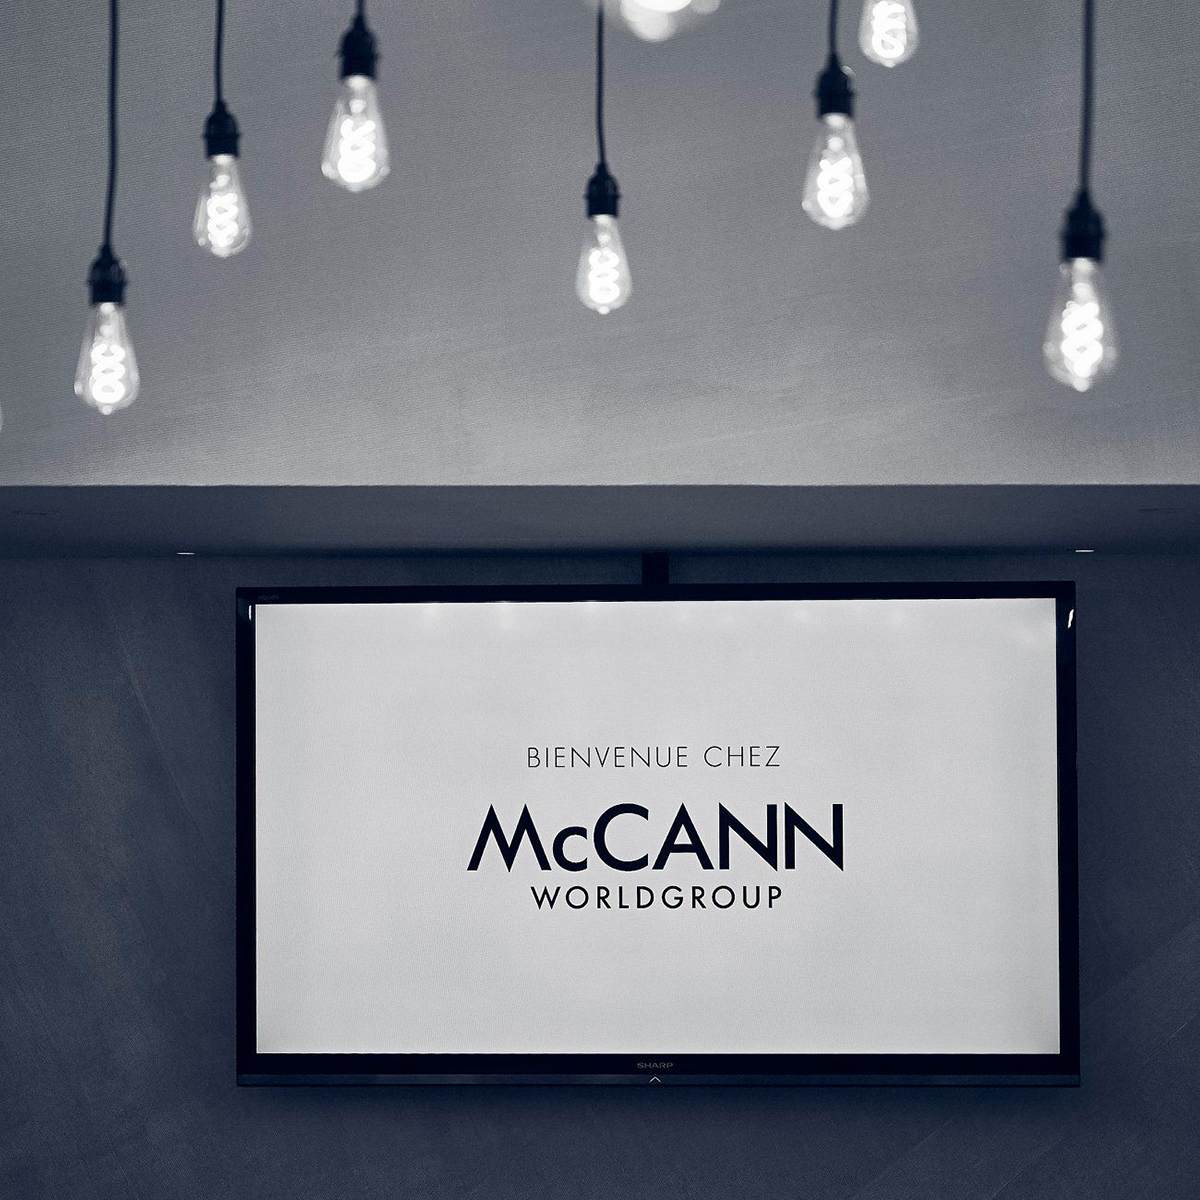 mccann-paris-mrm-weber-shandwick-futurebrand-bureaux-photos-mcann-worldgroup-france-office-3